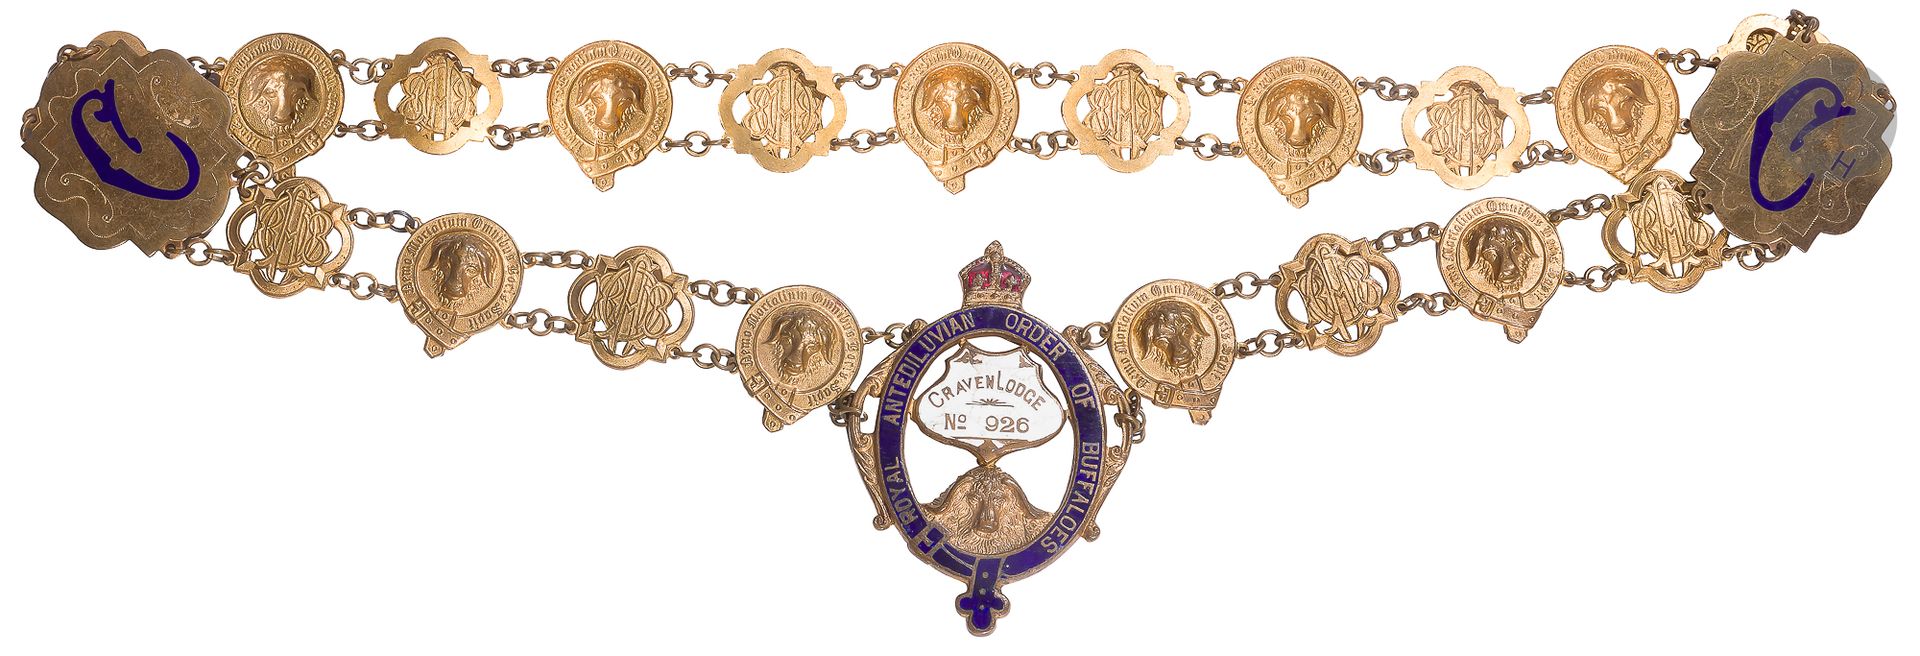 Null « Royal Antediluvian Order of Buffaloes »
Grand collier de fraternité garni&hellip;